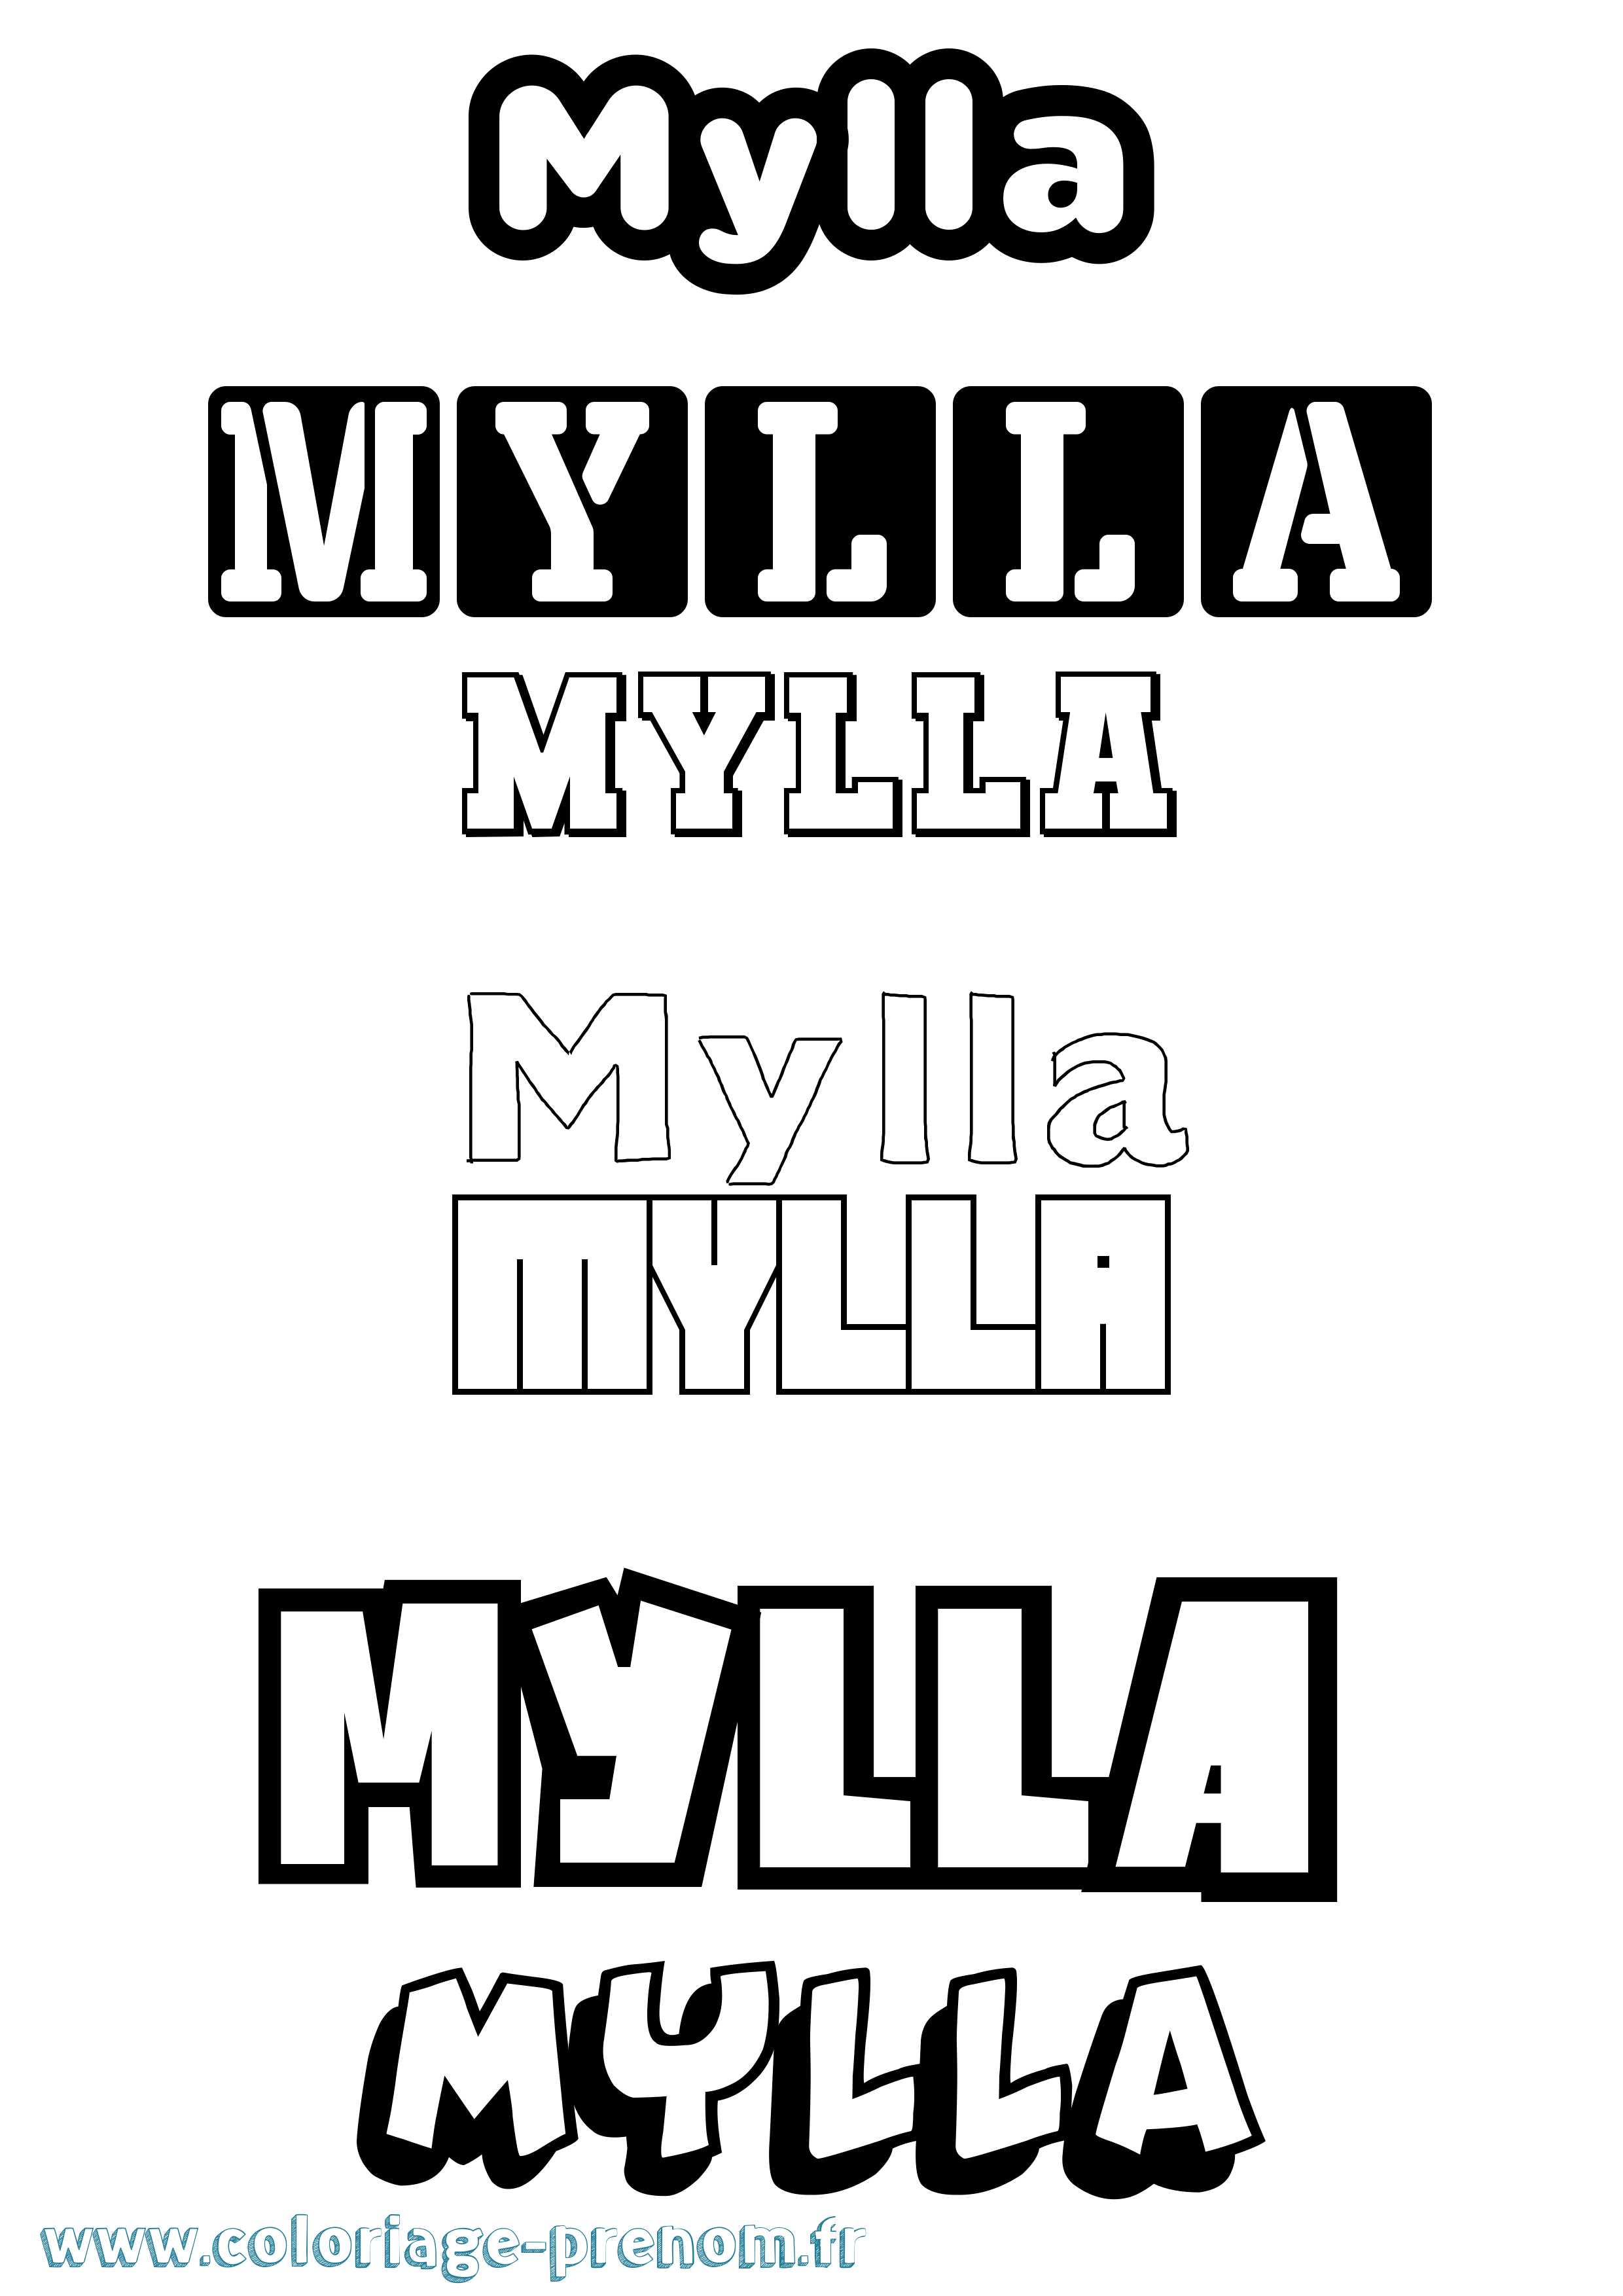 Coloriage prénom Mylla Simple